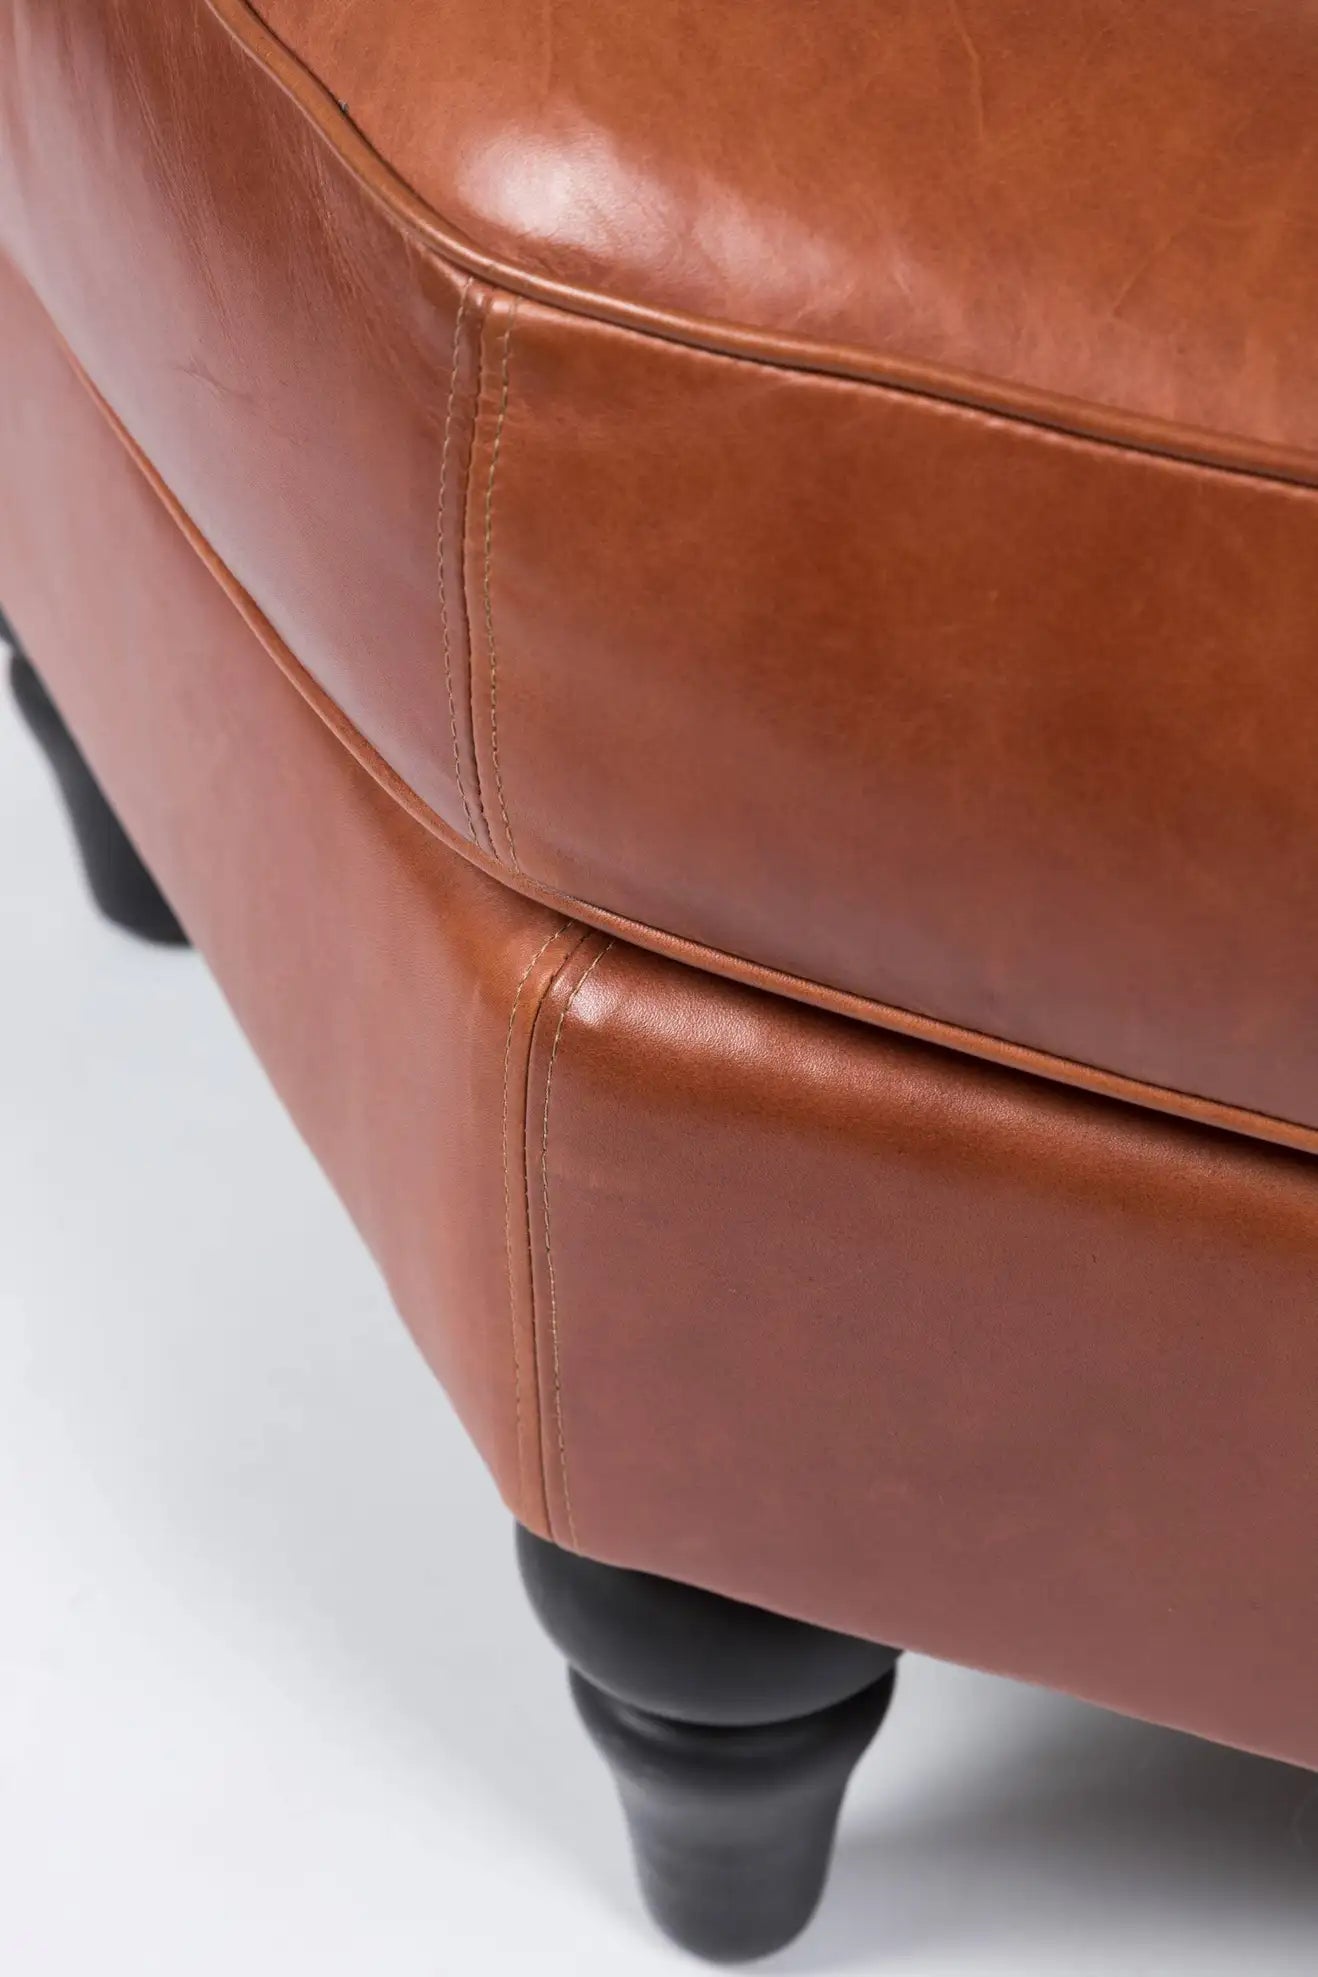 Nate Large Leather – Cognac Octagonal Berkus Ottoman